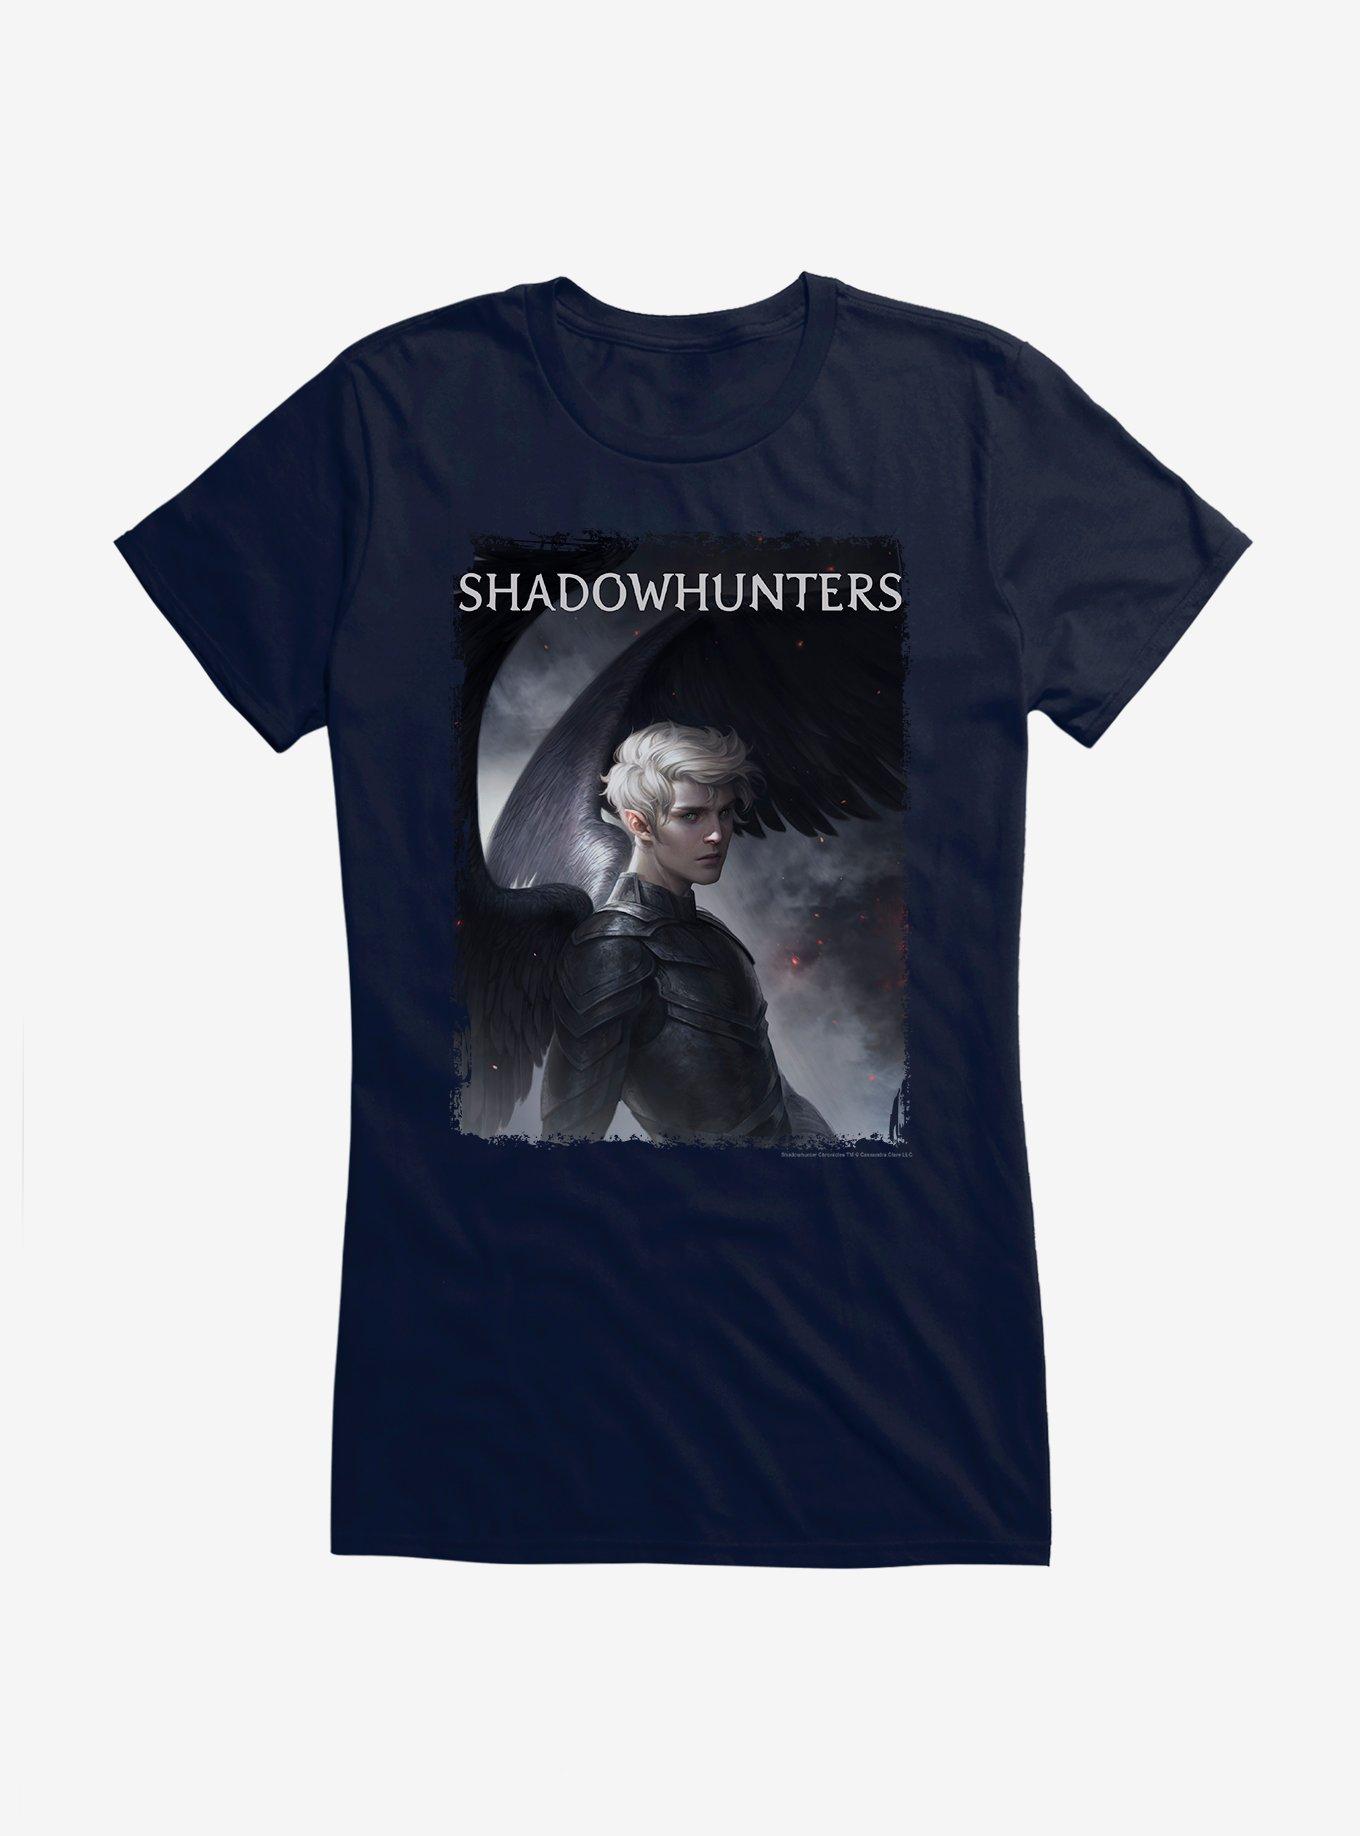 Shadowhunters Ash Morgenstern Girls T-Shirt